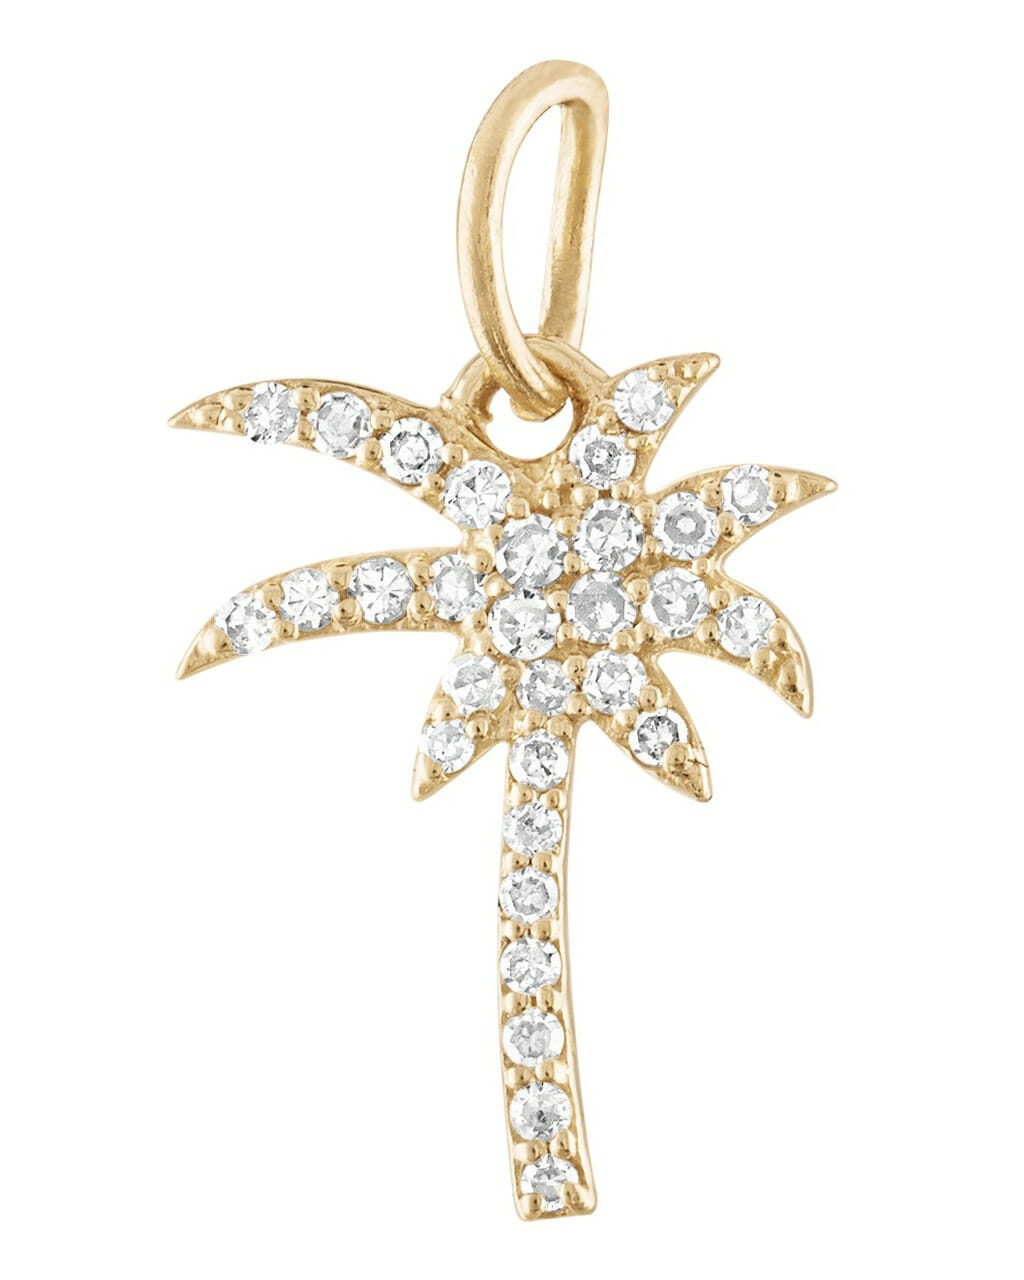 diamond jewelry bridesmaid gifts ideas wedding bridal  charmco palm tress